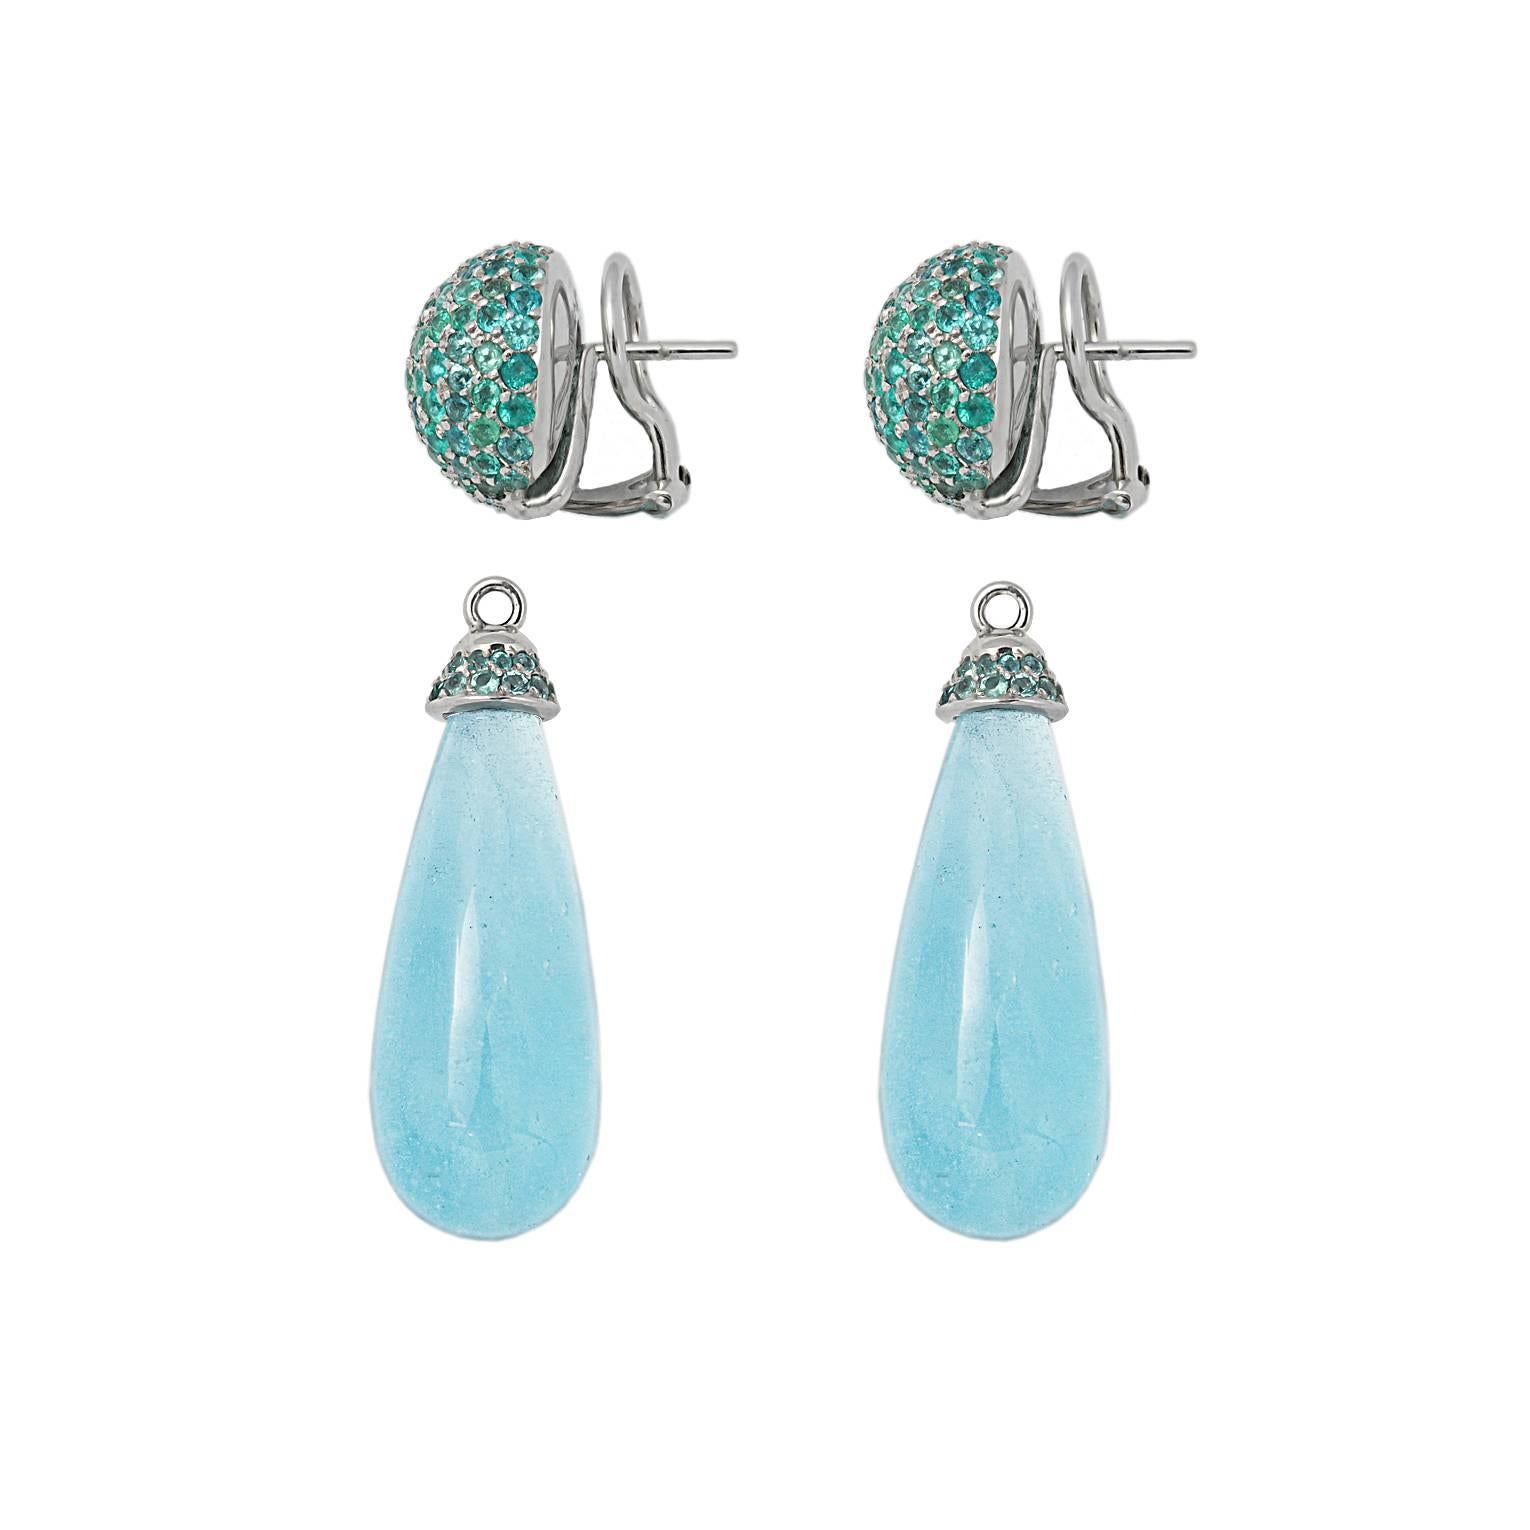 Contemporary Colleen B. Rosenblat aquamarine and paraiba tourmaline gold earrings